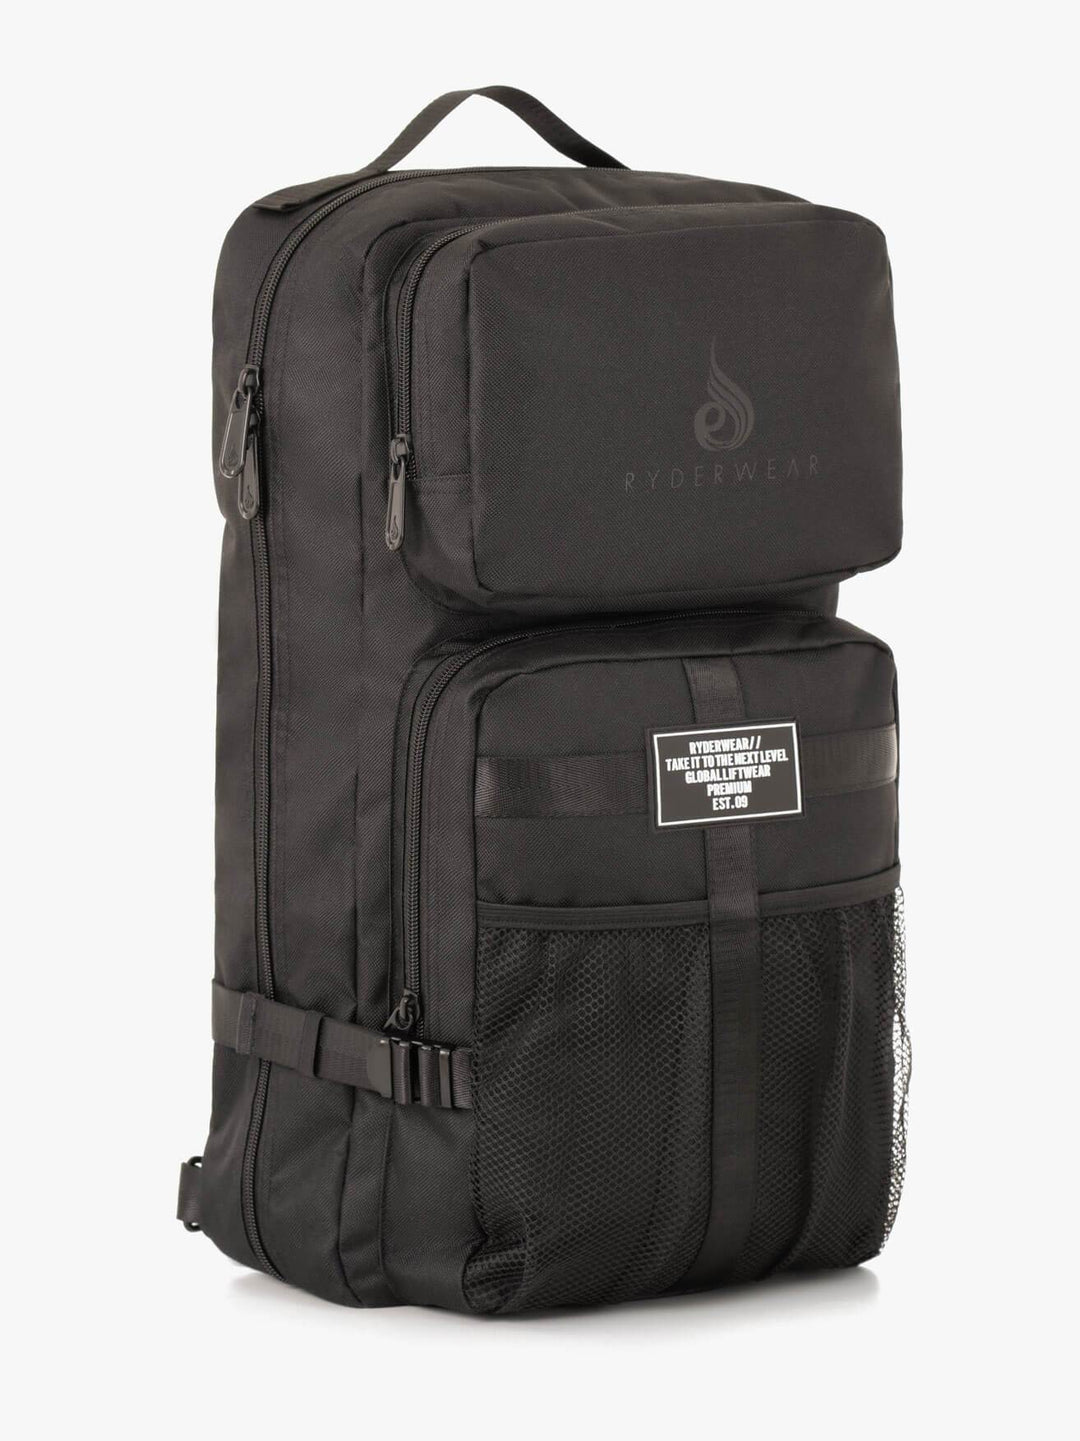 Duty Backpack - Graphite Accessories Ryderwear 